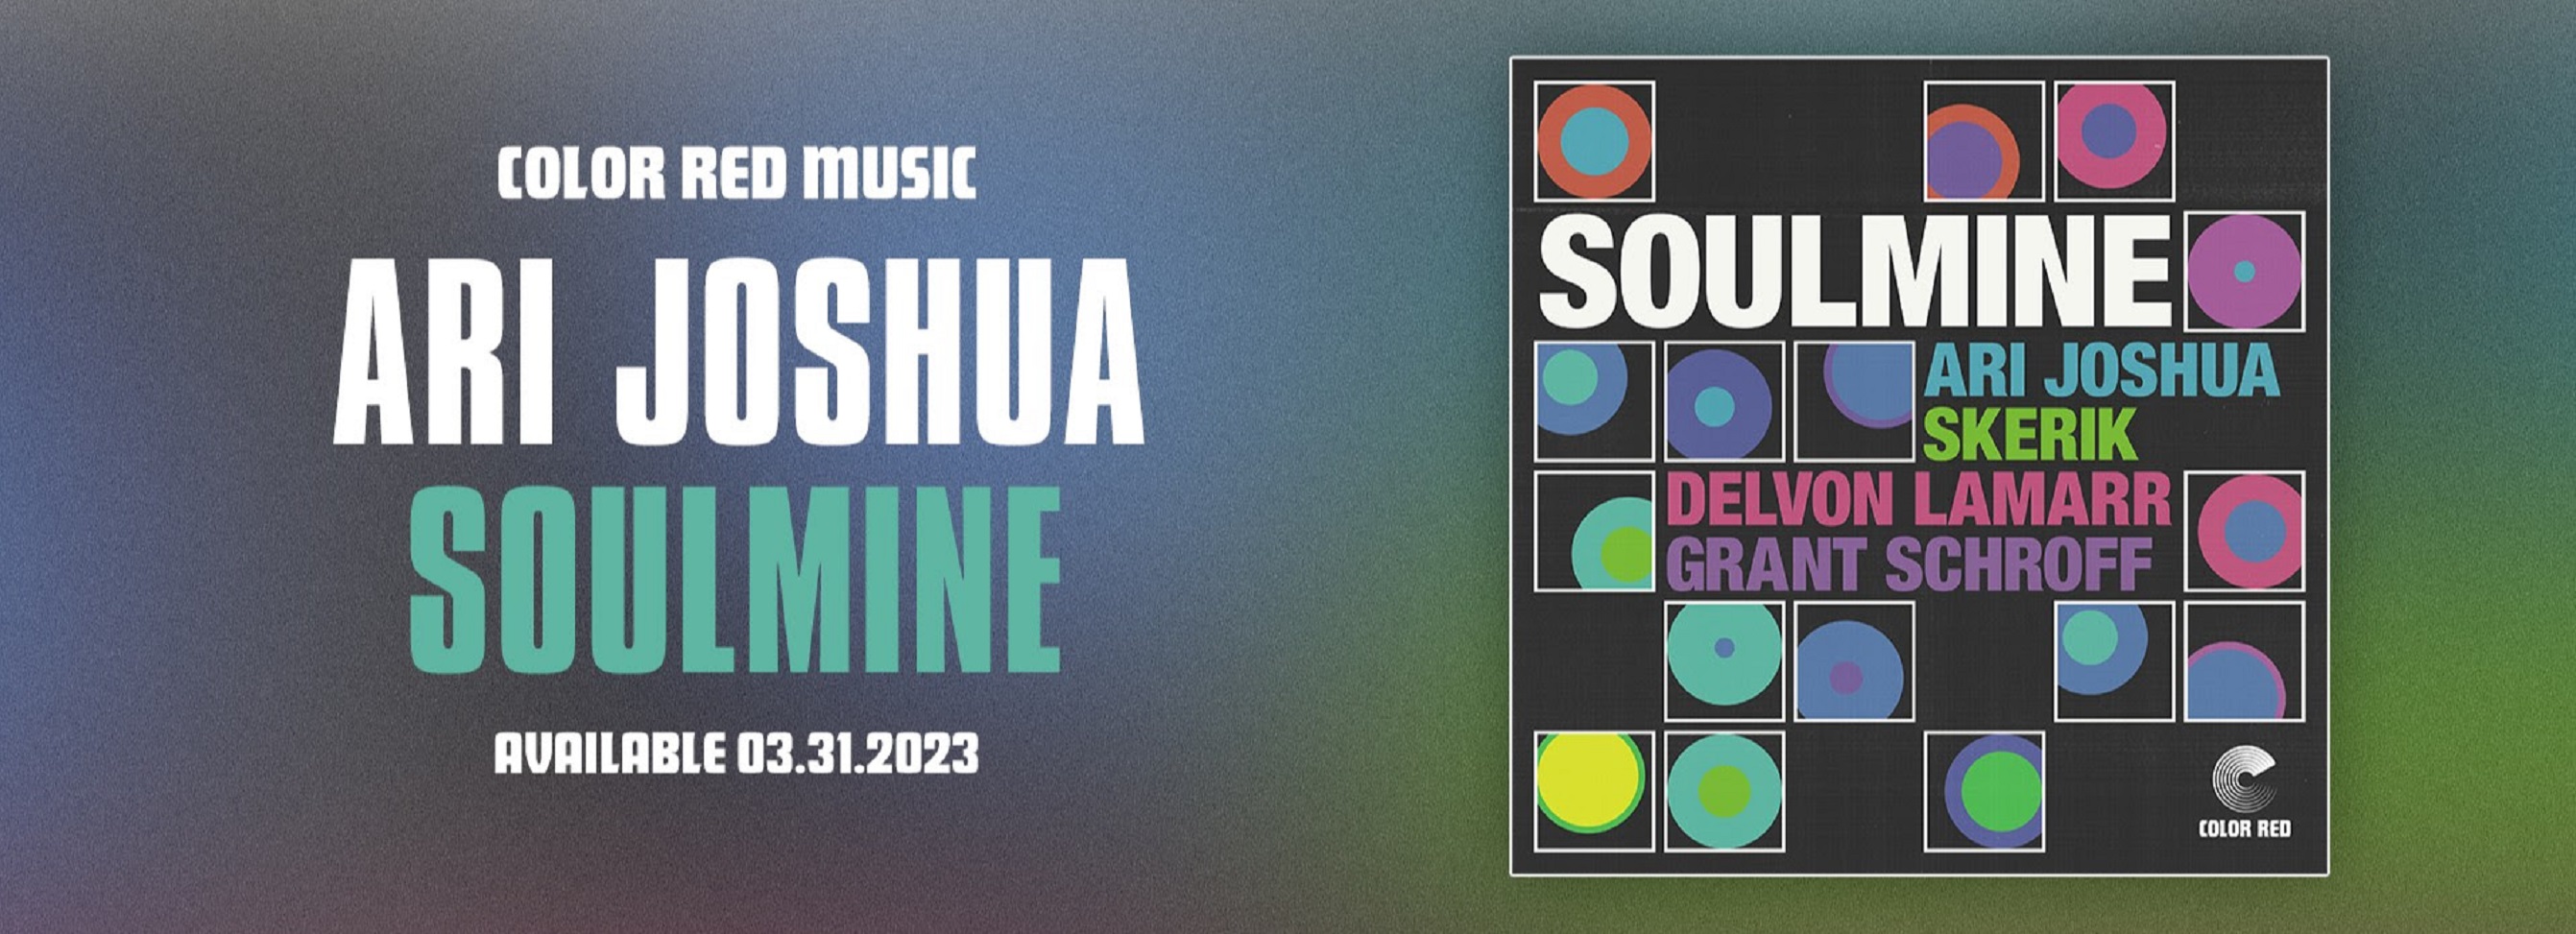 Color Red Records Shares New Single "SoulMine" featuring Ari Joshua, Skerik, Delvon Lamarr, & Grant Schroff